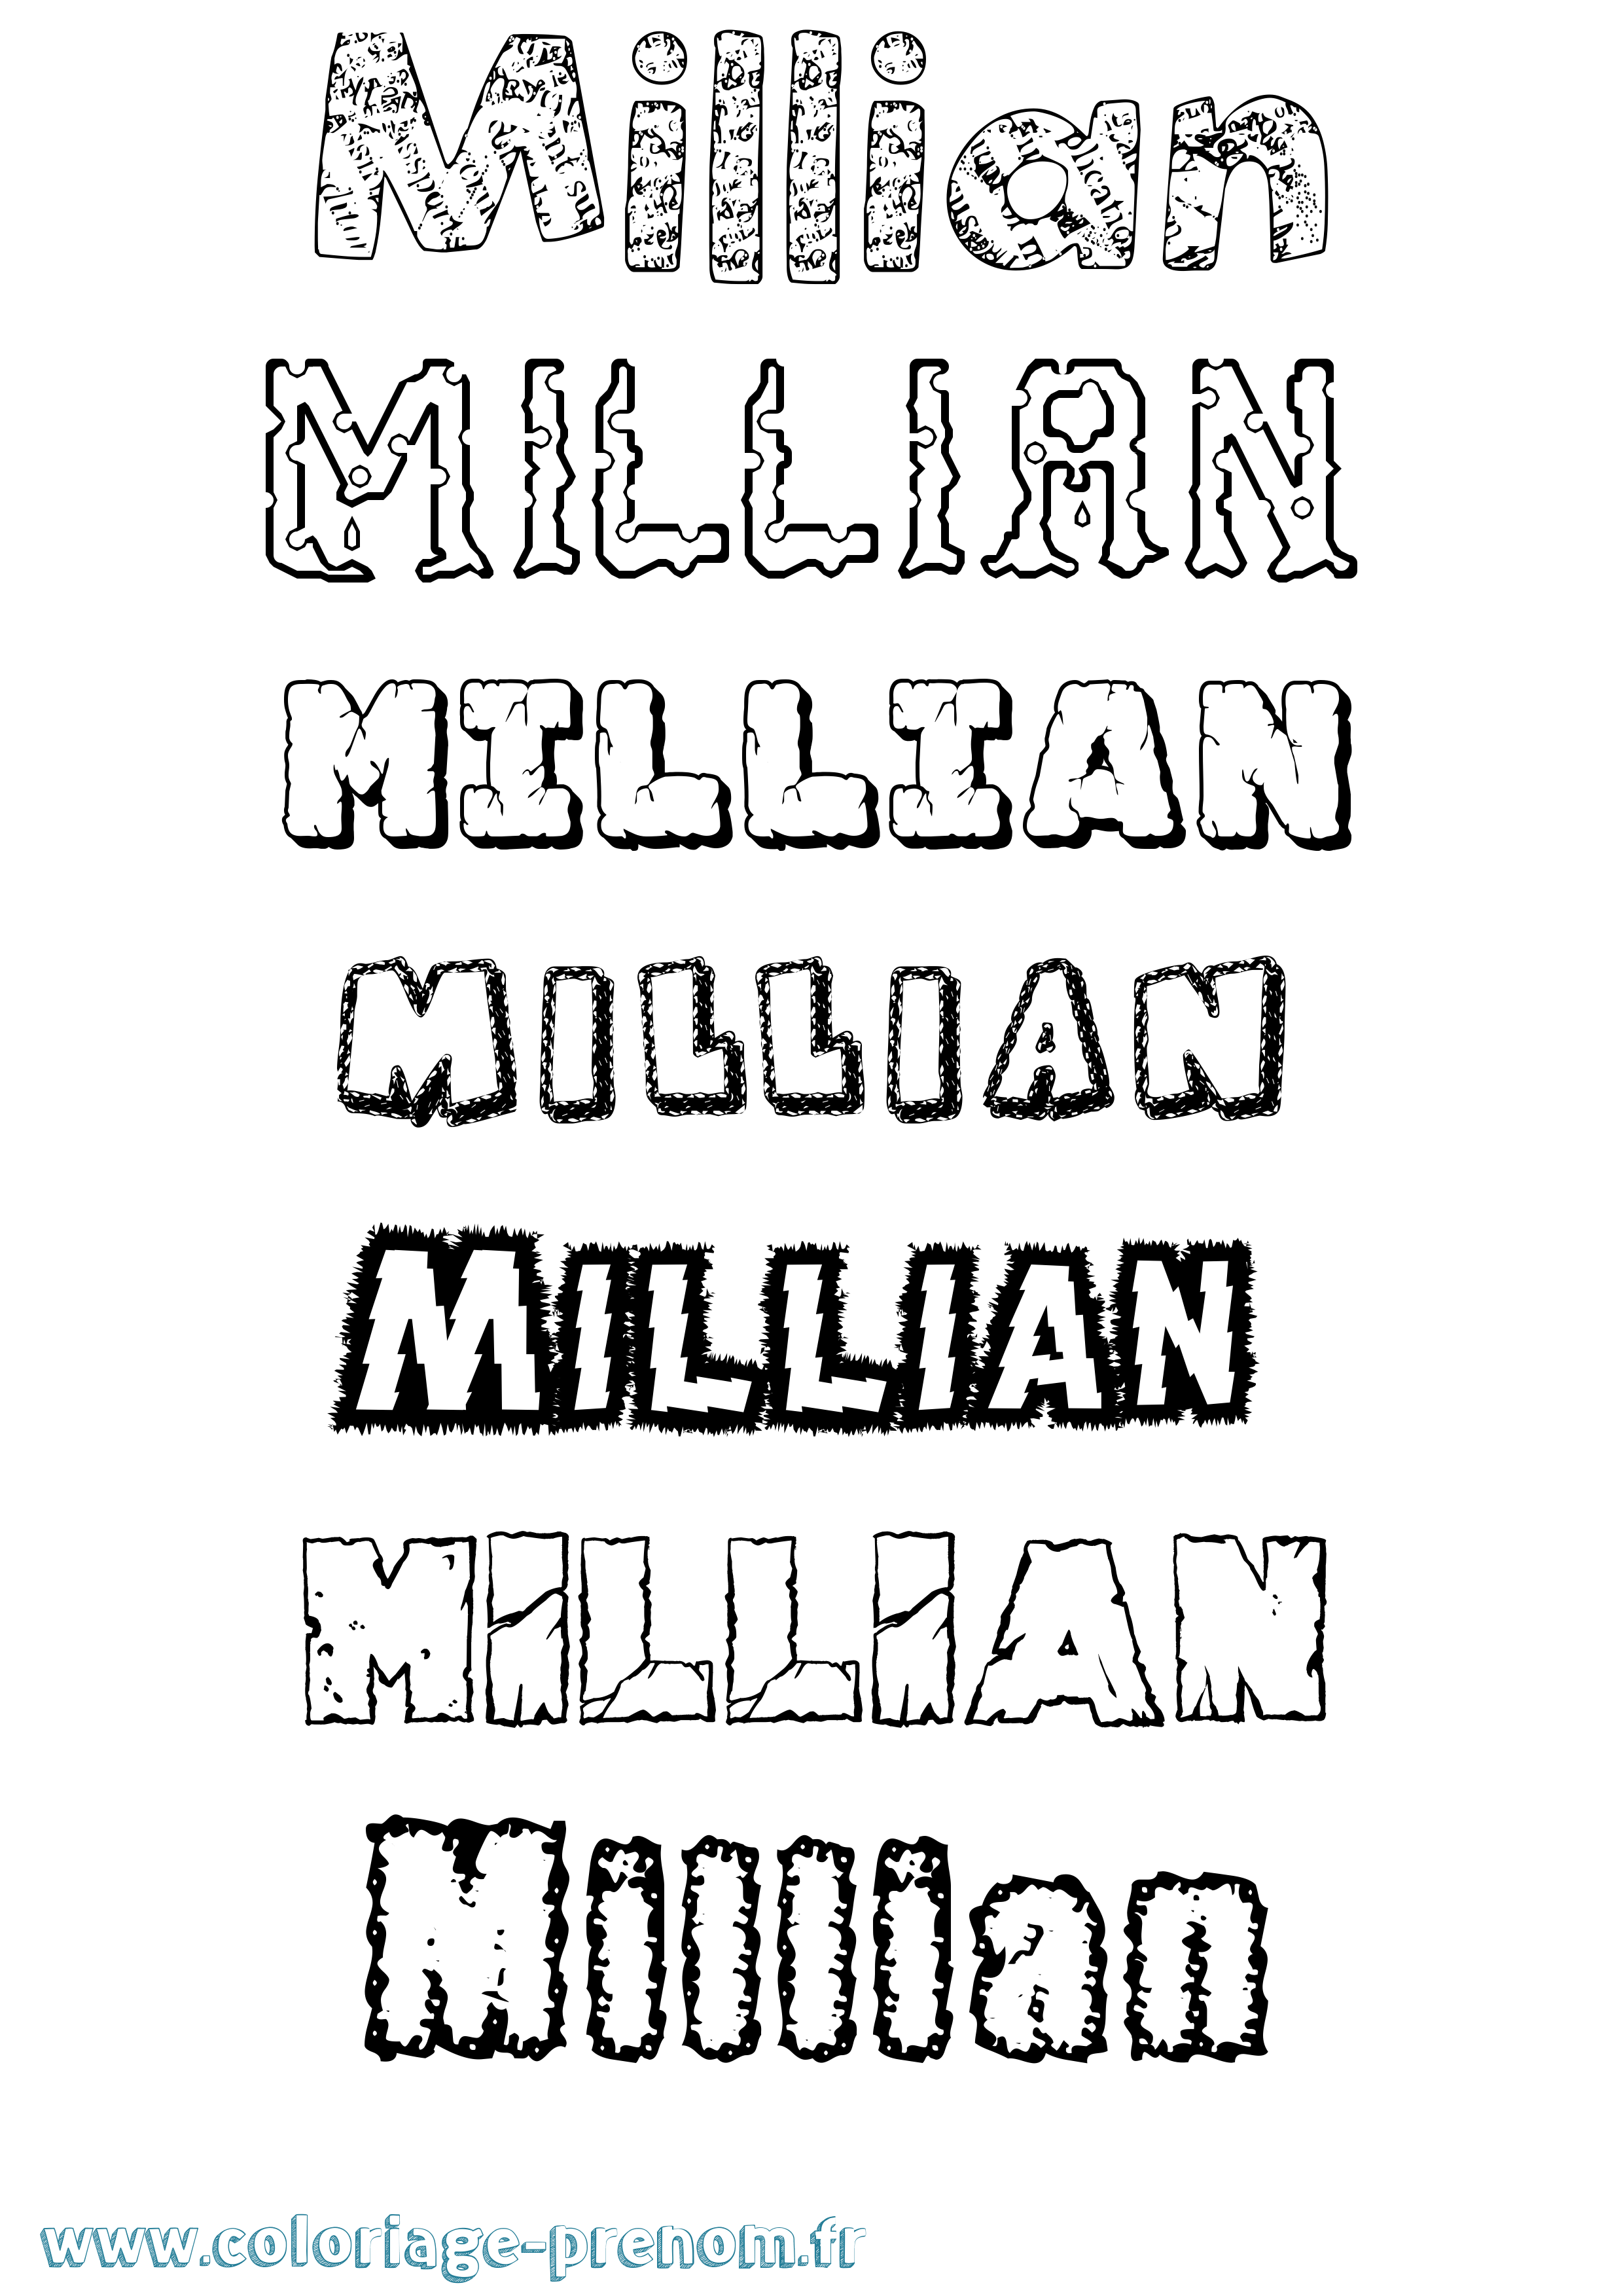 Coloriage prénom Millian Destructuré